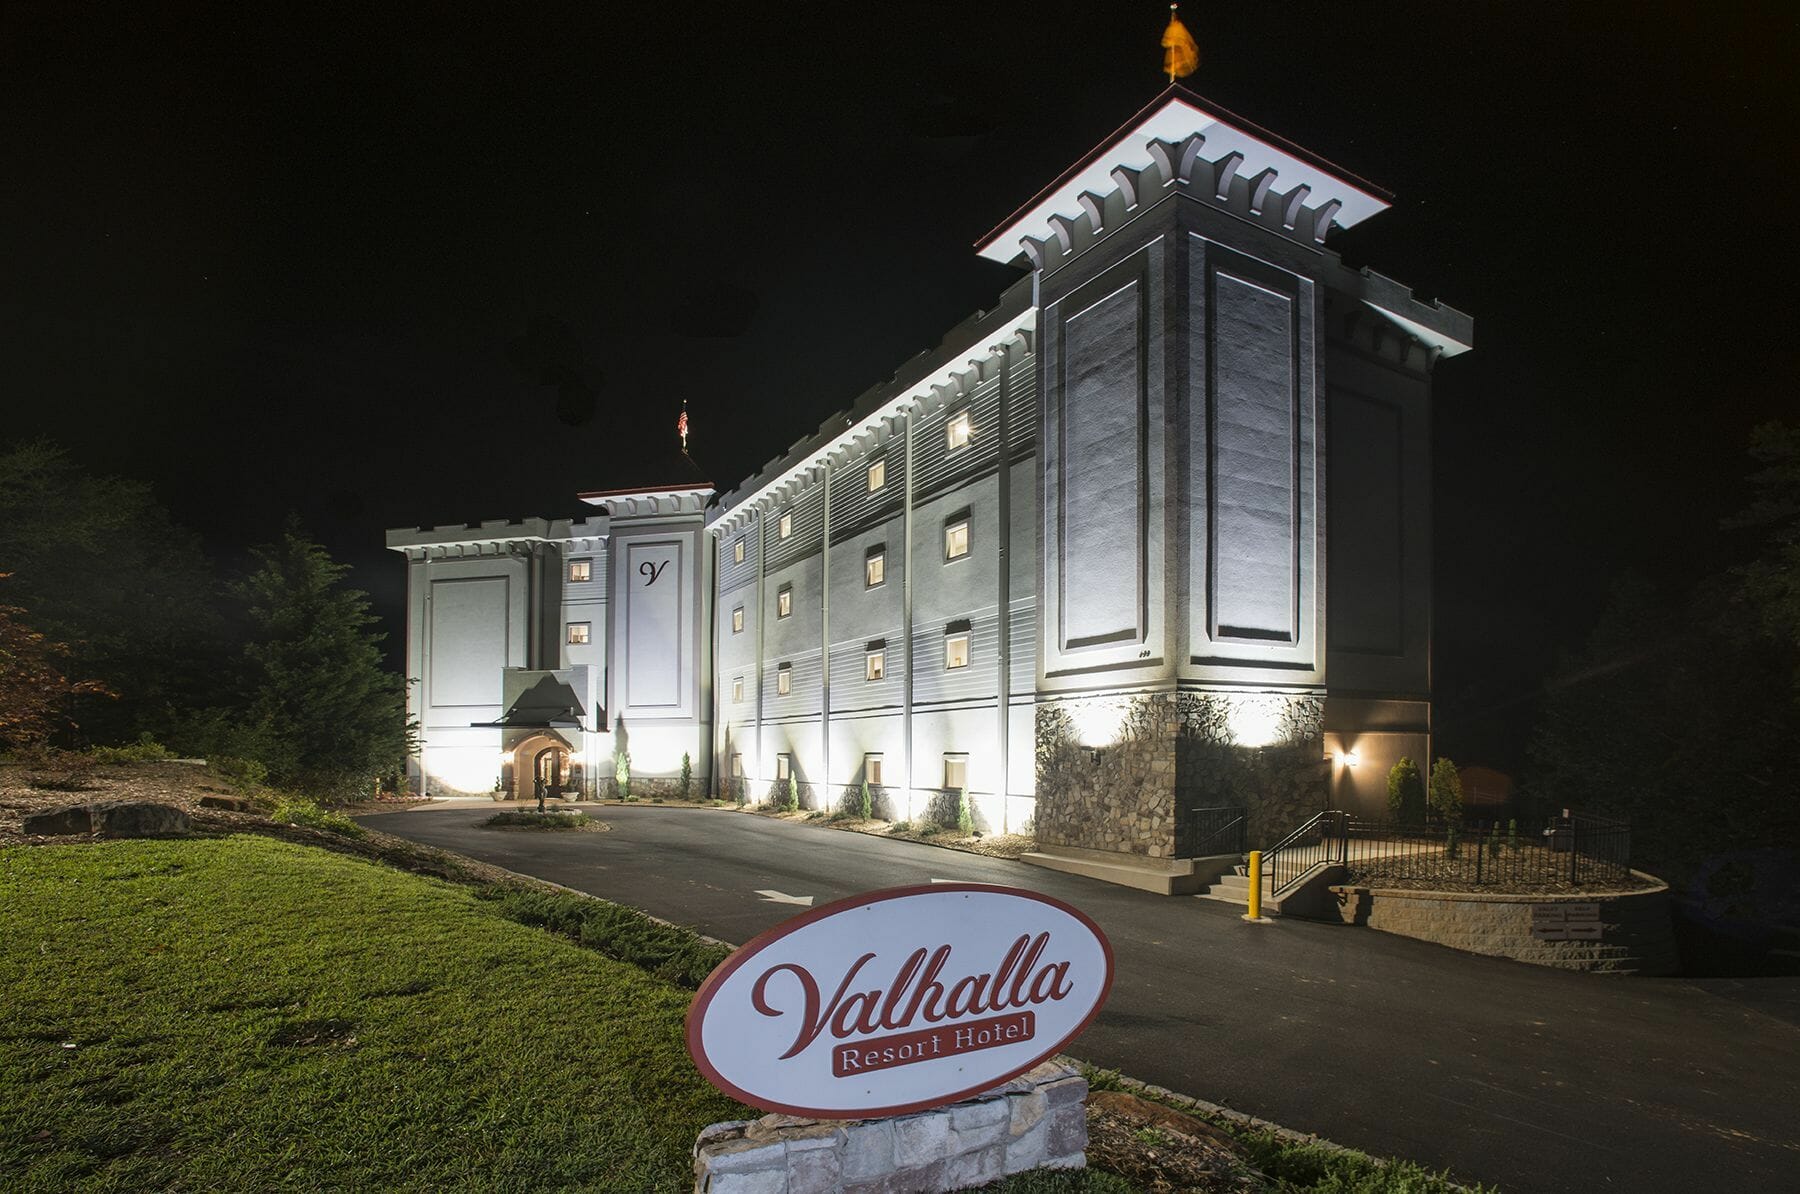 Building view of Valhalla Resort Hotel